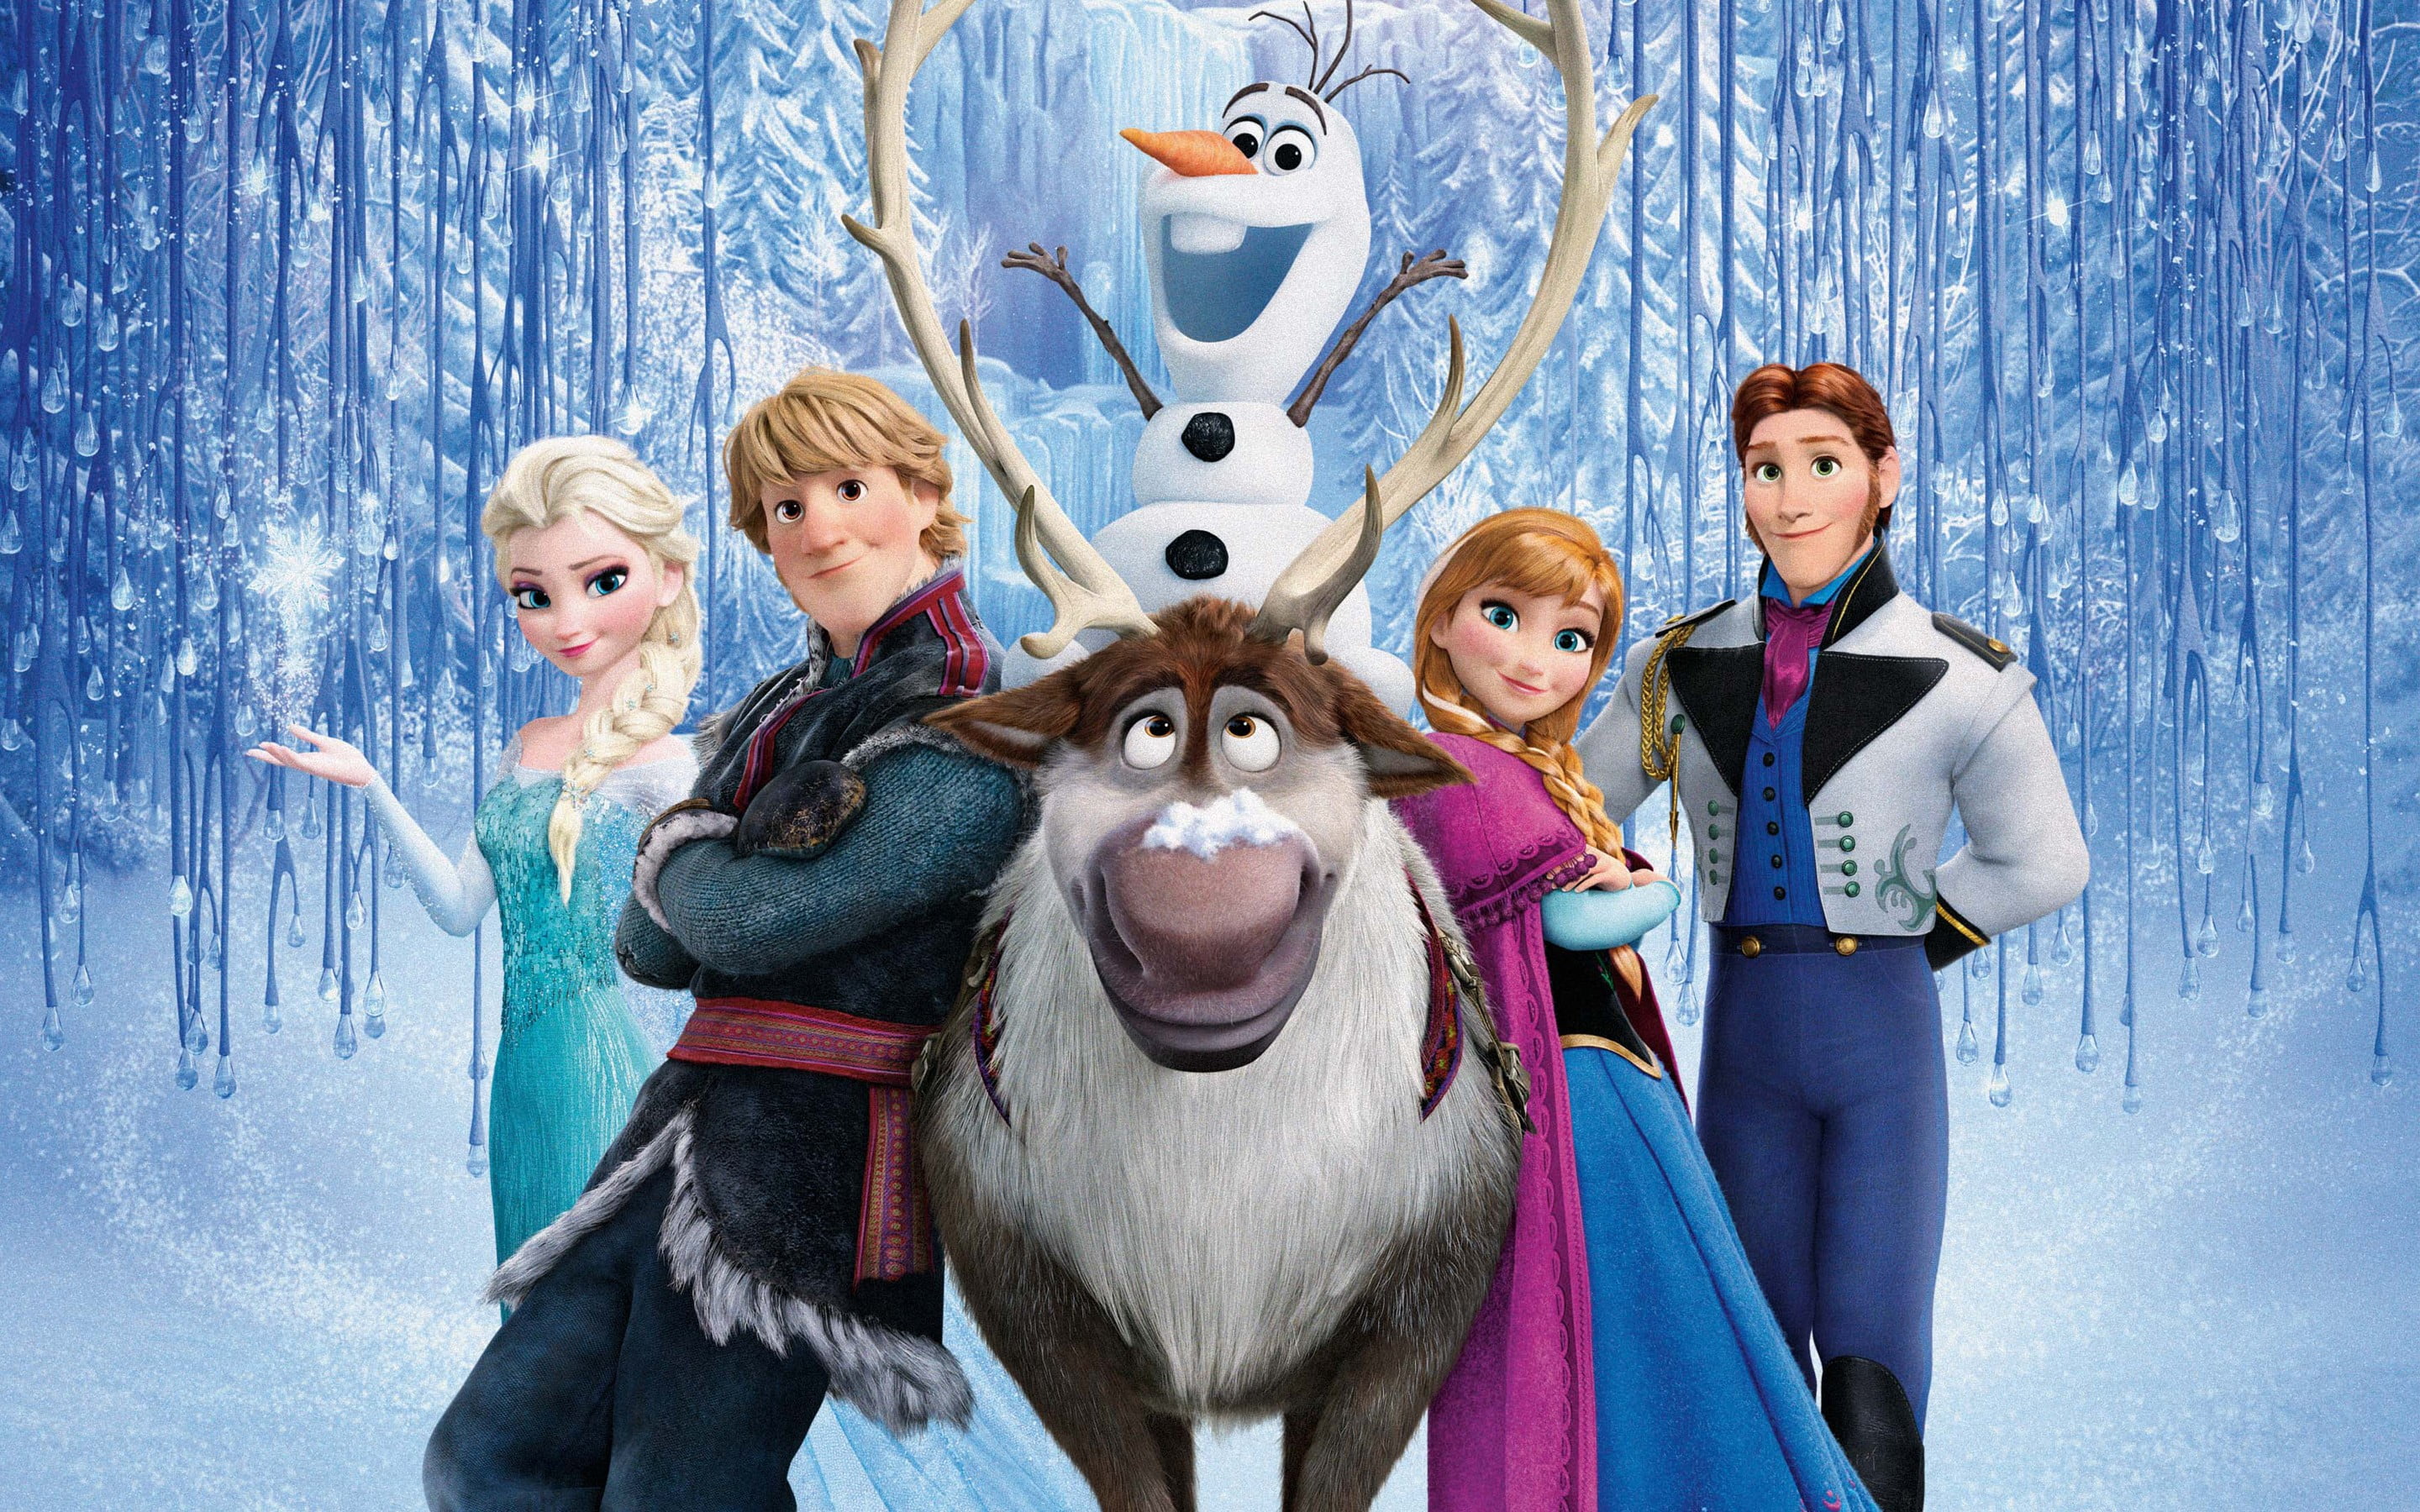 Disney Frozen Poster /> Anna /> Elsa /> Olaf /> Sven /> Princess /> Mini Poster//Print